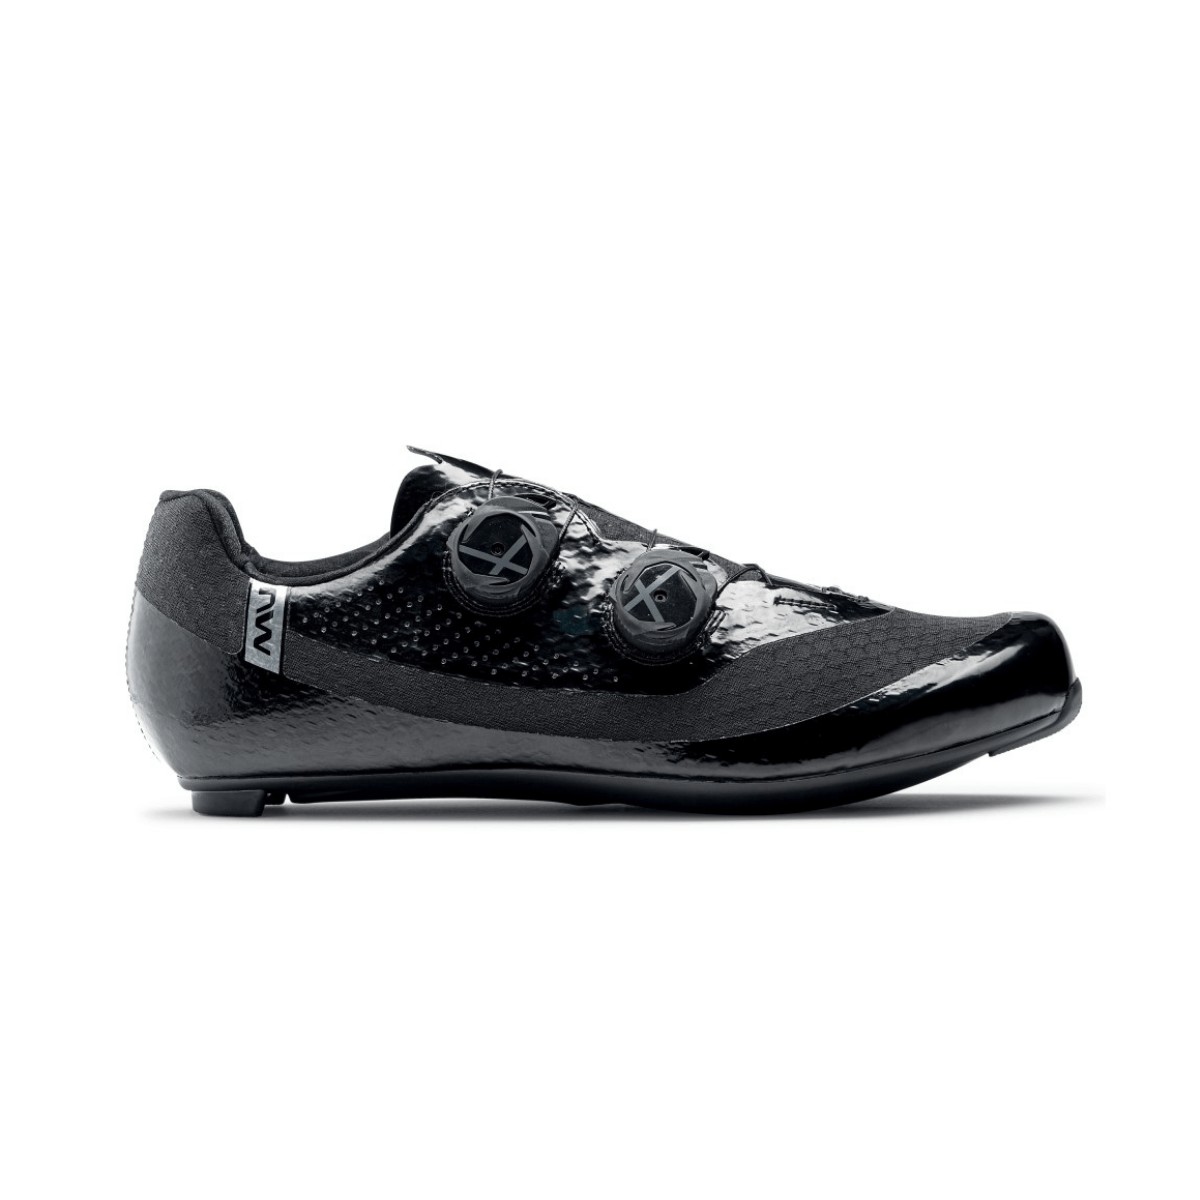 Chaussures Northwave Mistral Plus Noir, Taille 40 - EUR